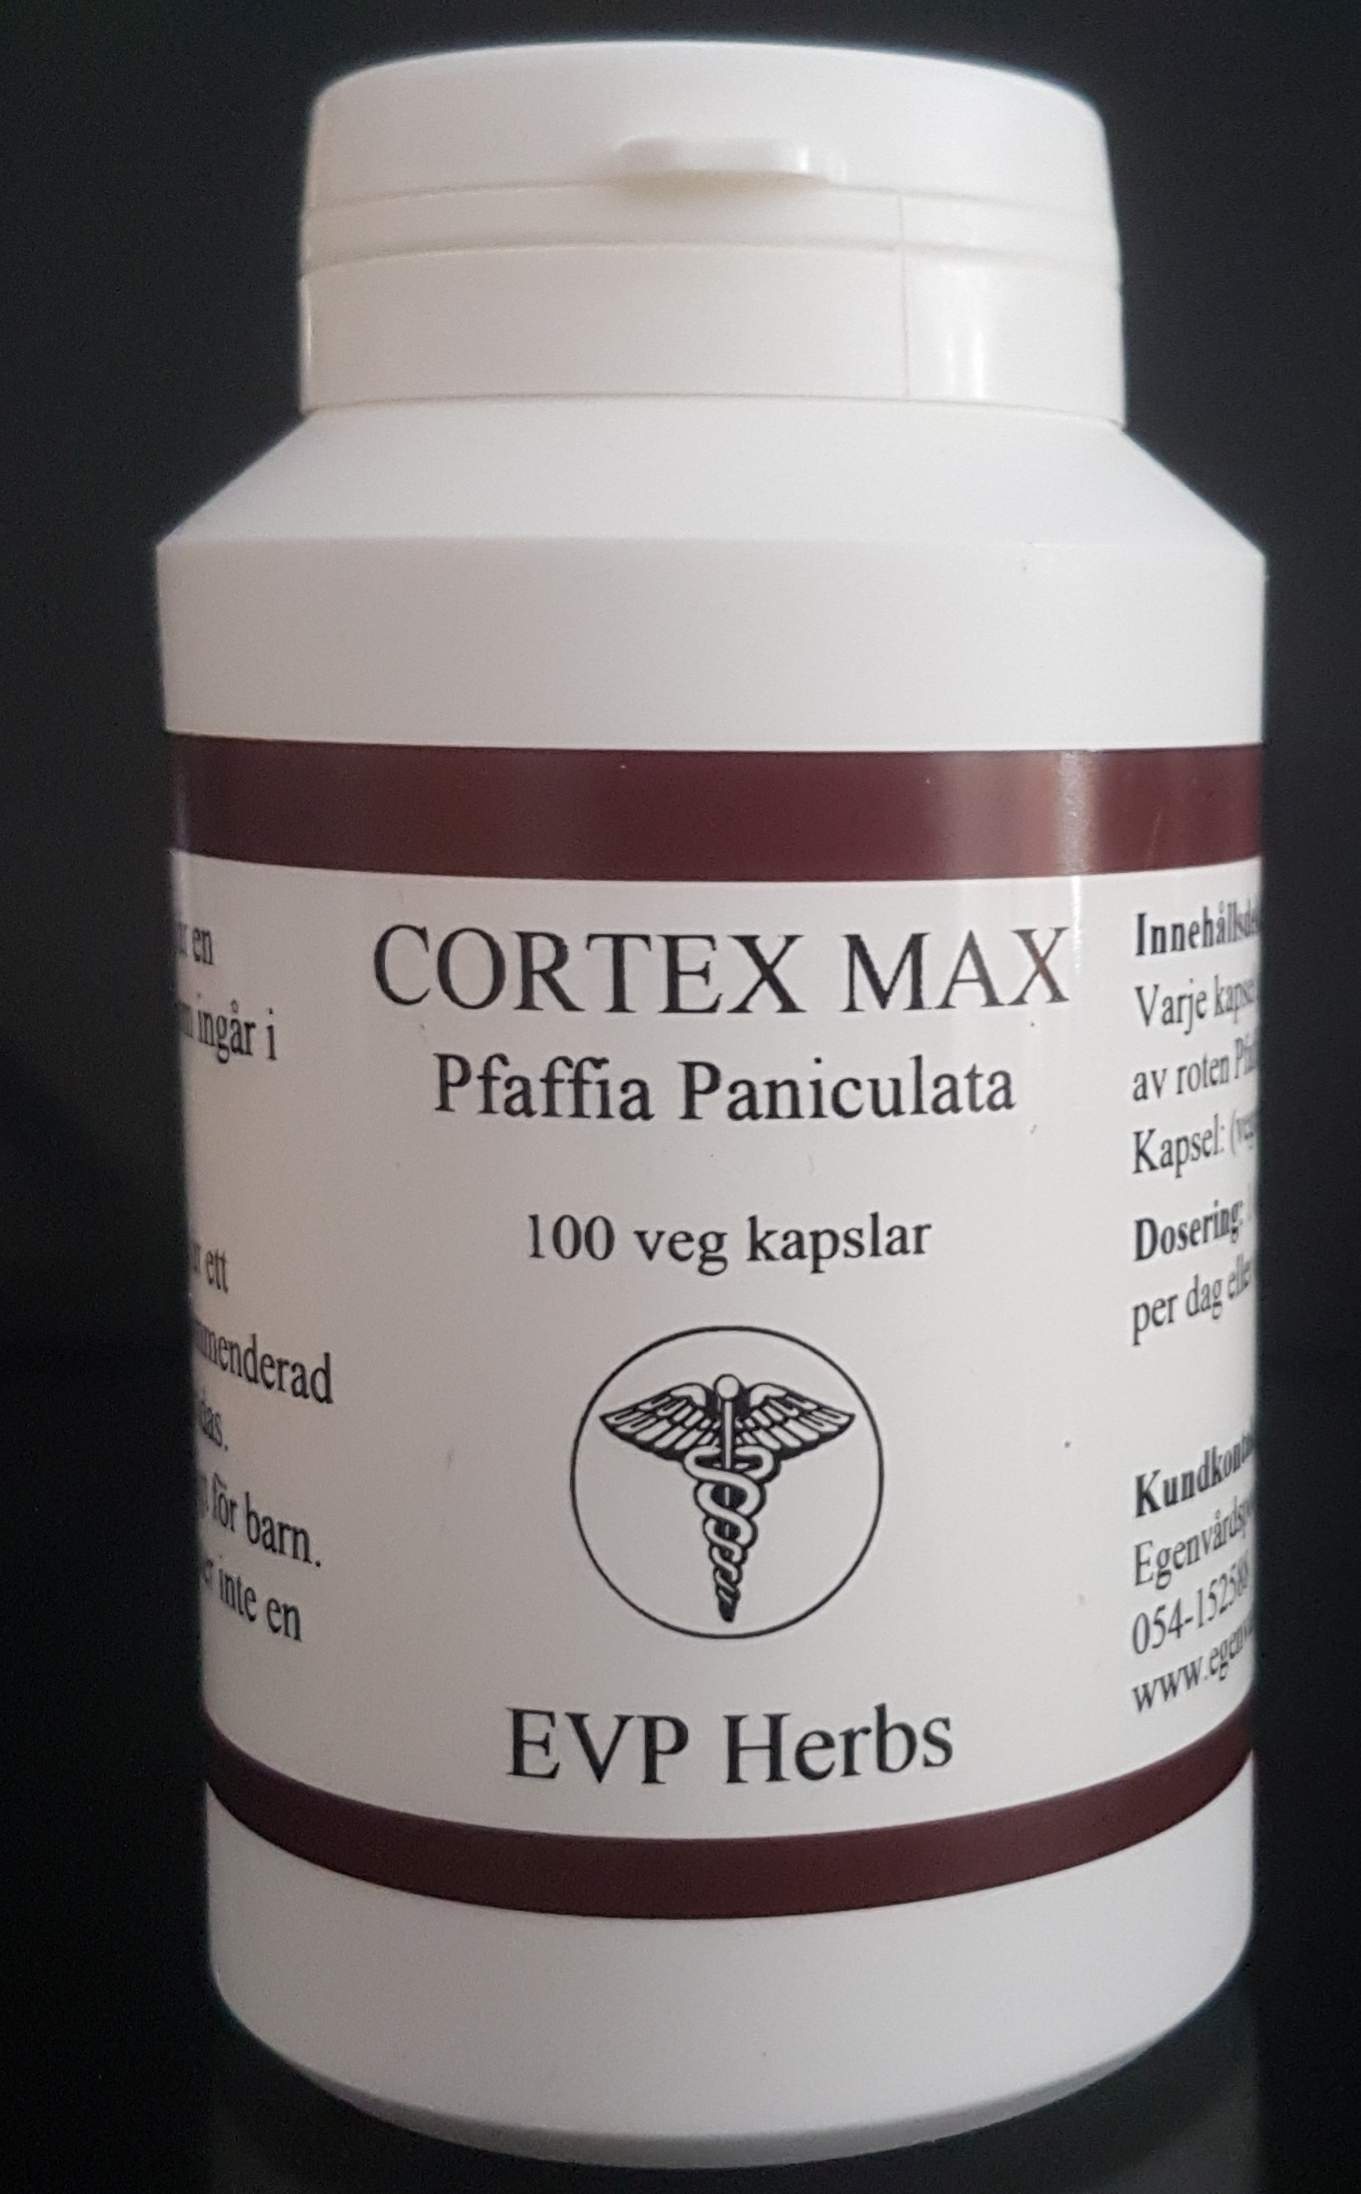 Cortex Max, Pfaffia Paniculata